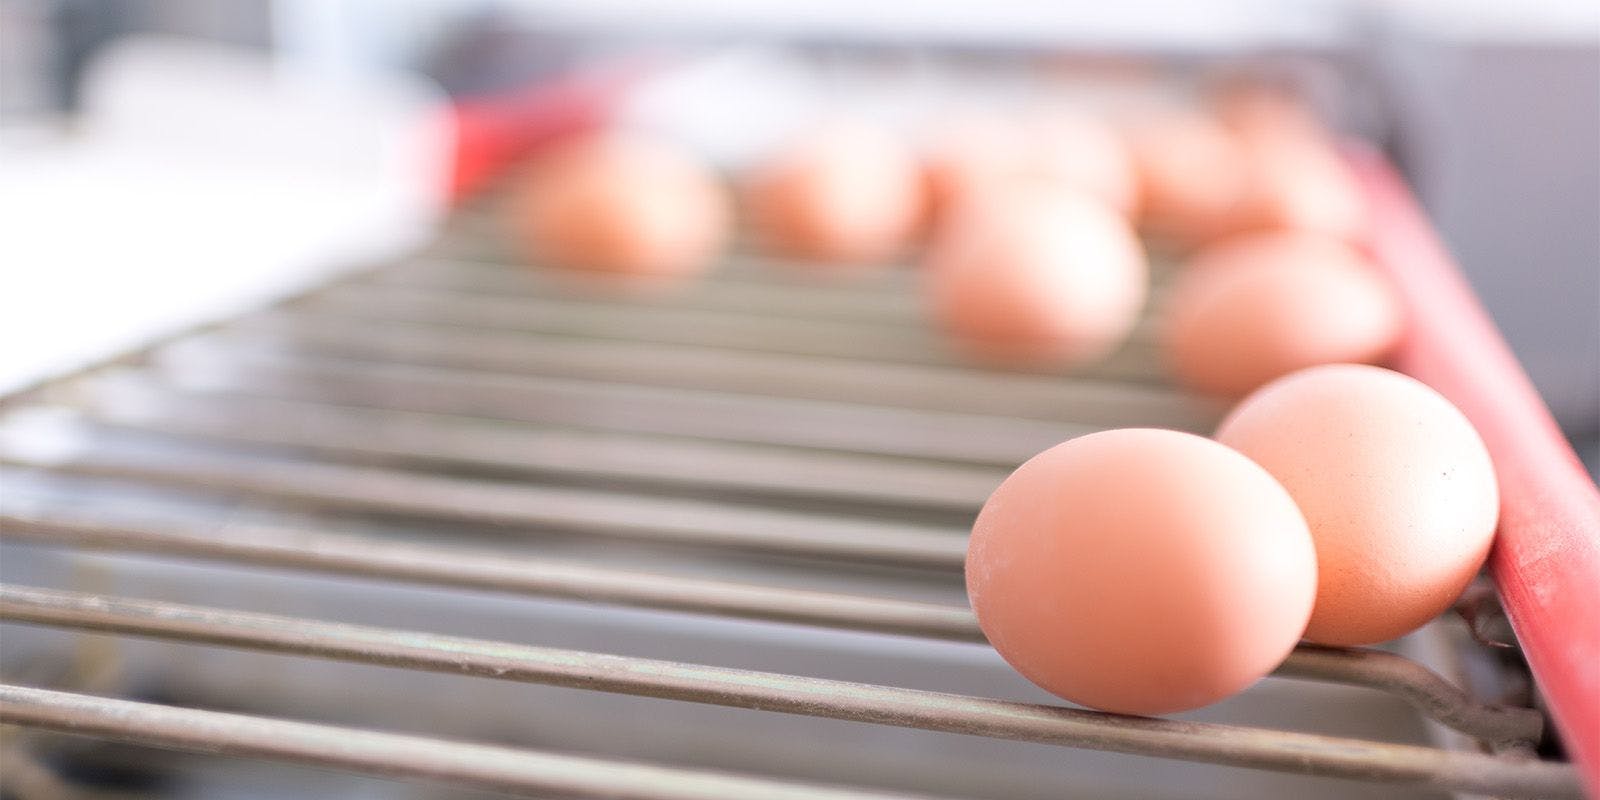 Organic eggs come down a conveyor belt.